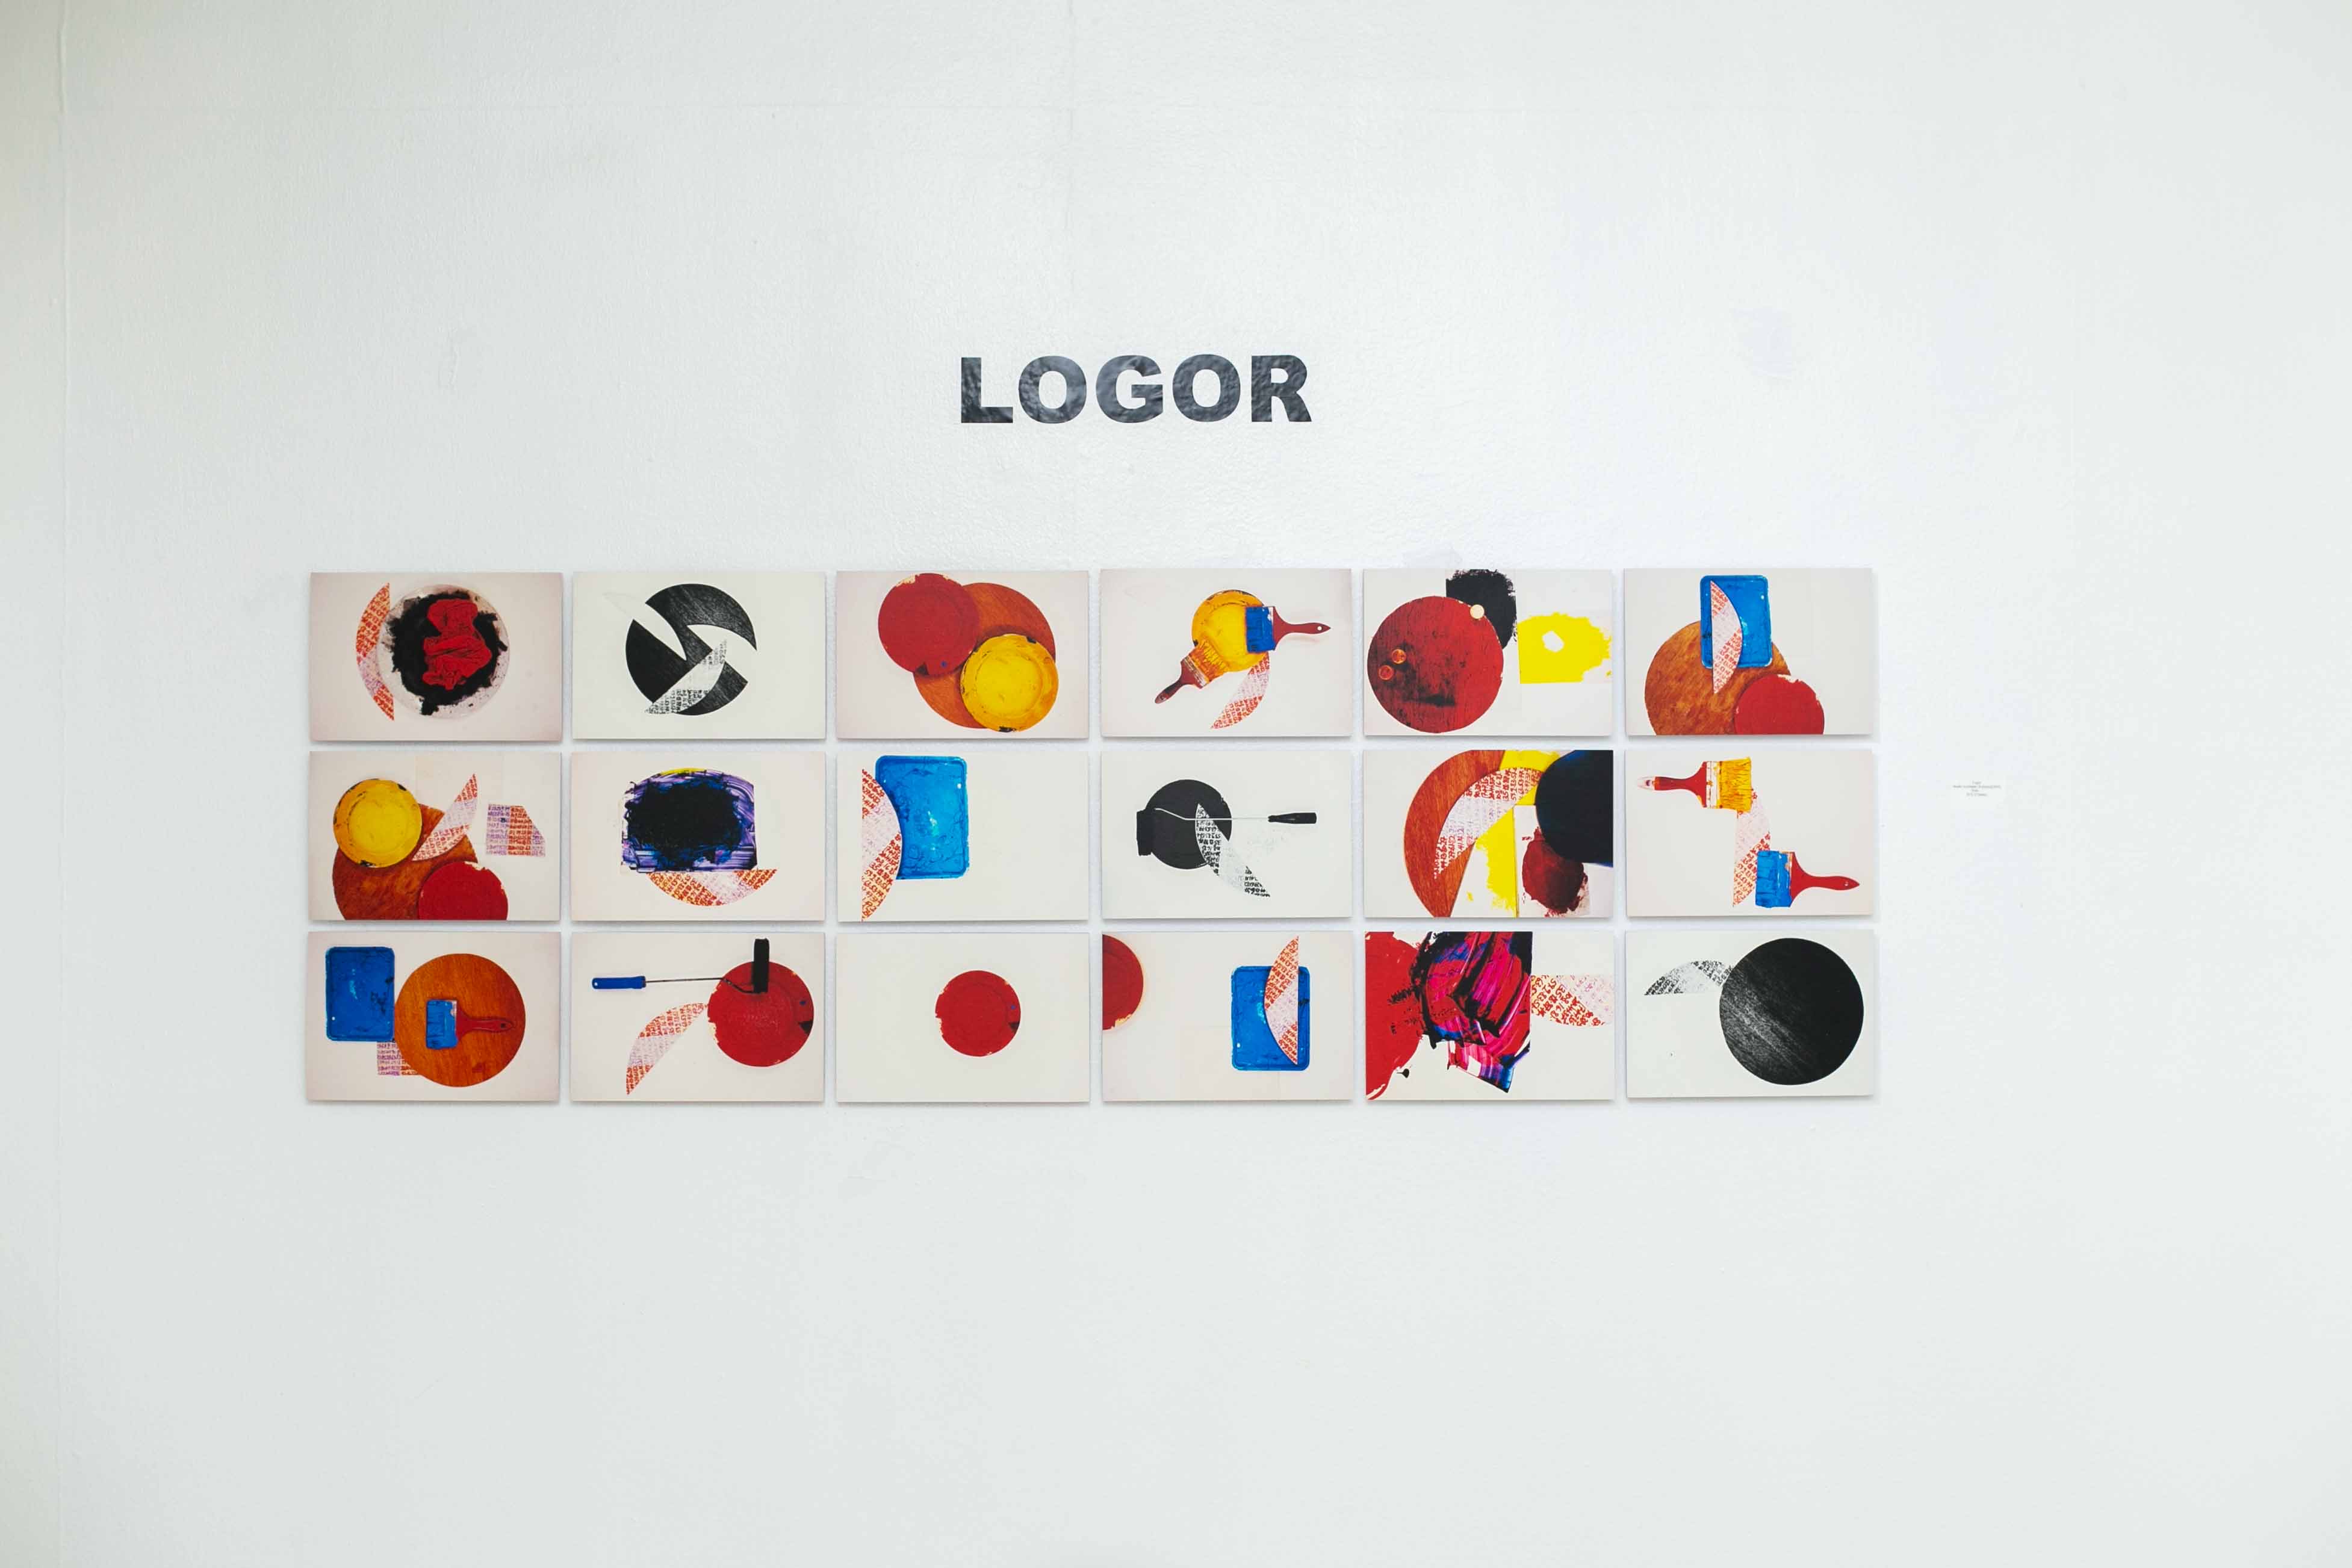 Installation View: Logor, "Studio Assistant", Rele Young Contemporaries Alumni Exhibition, 2020. Courtesy of Rele Gallery